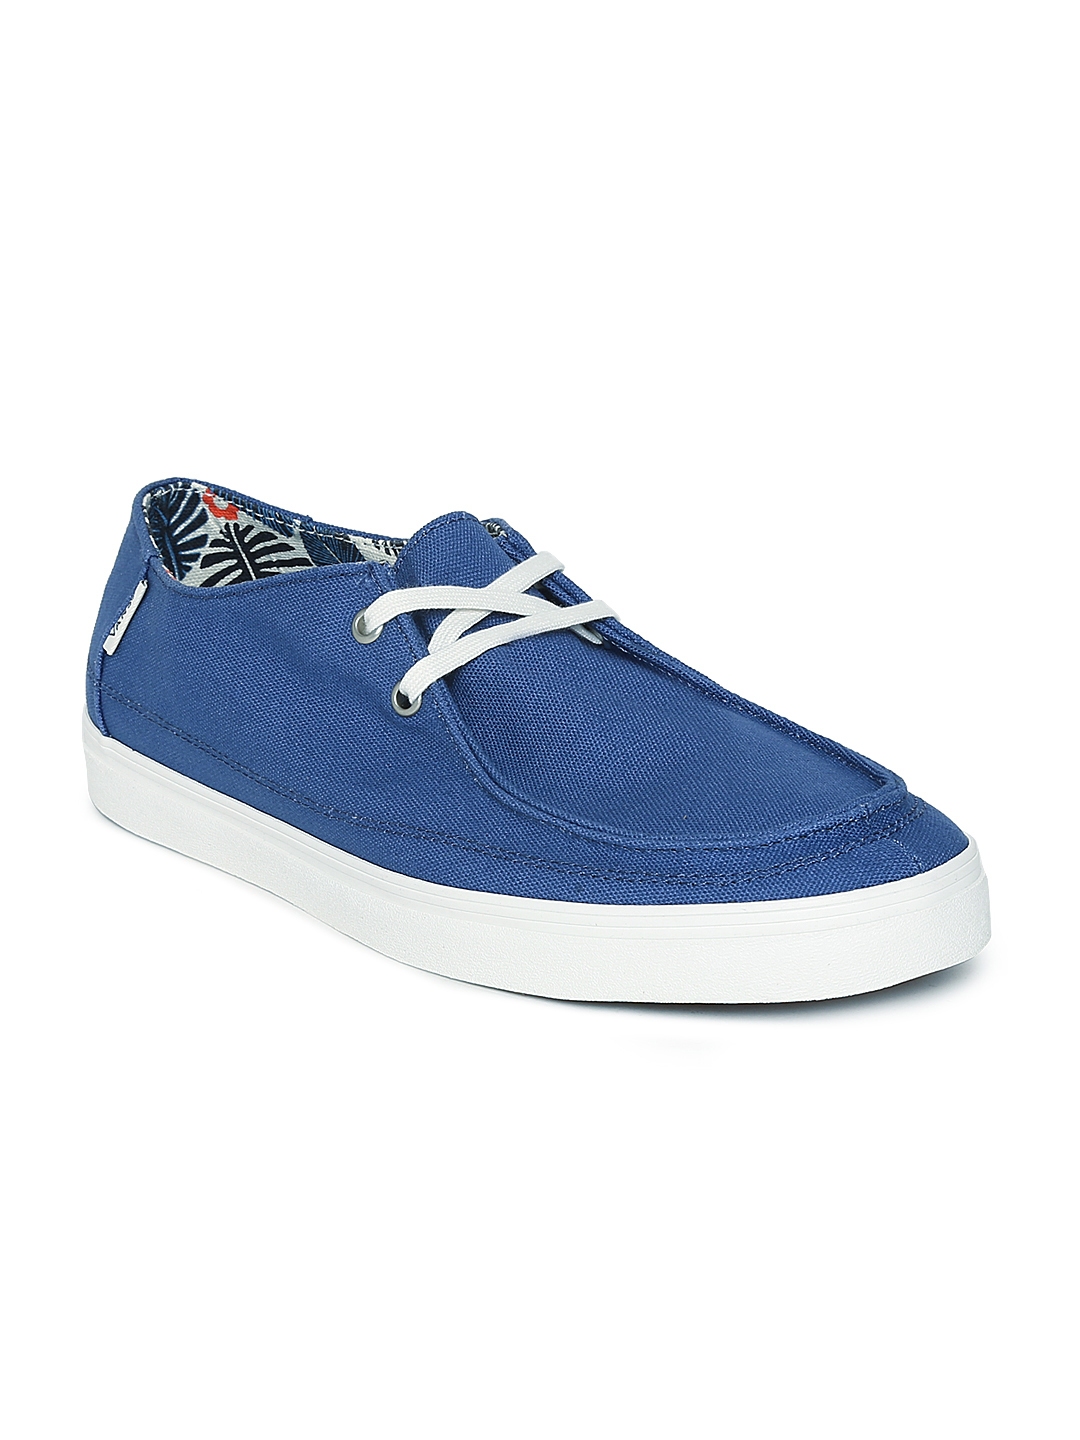 Buy Vans Men Blue Sneakers - Casual Shoes for Men 1816969 | Myntra